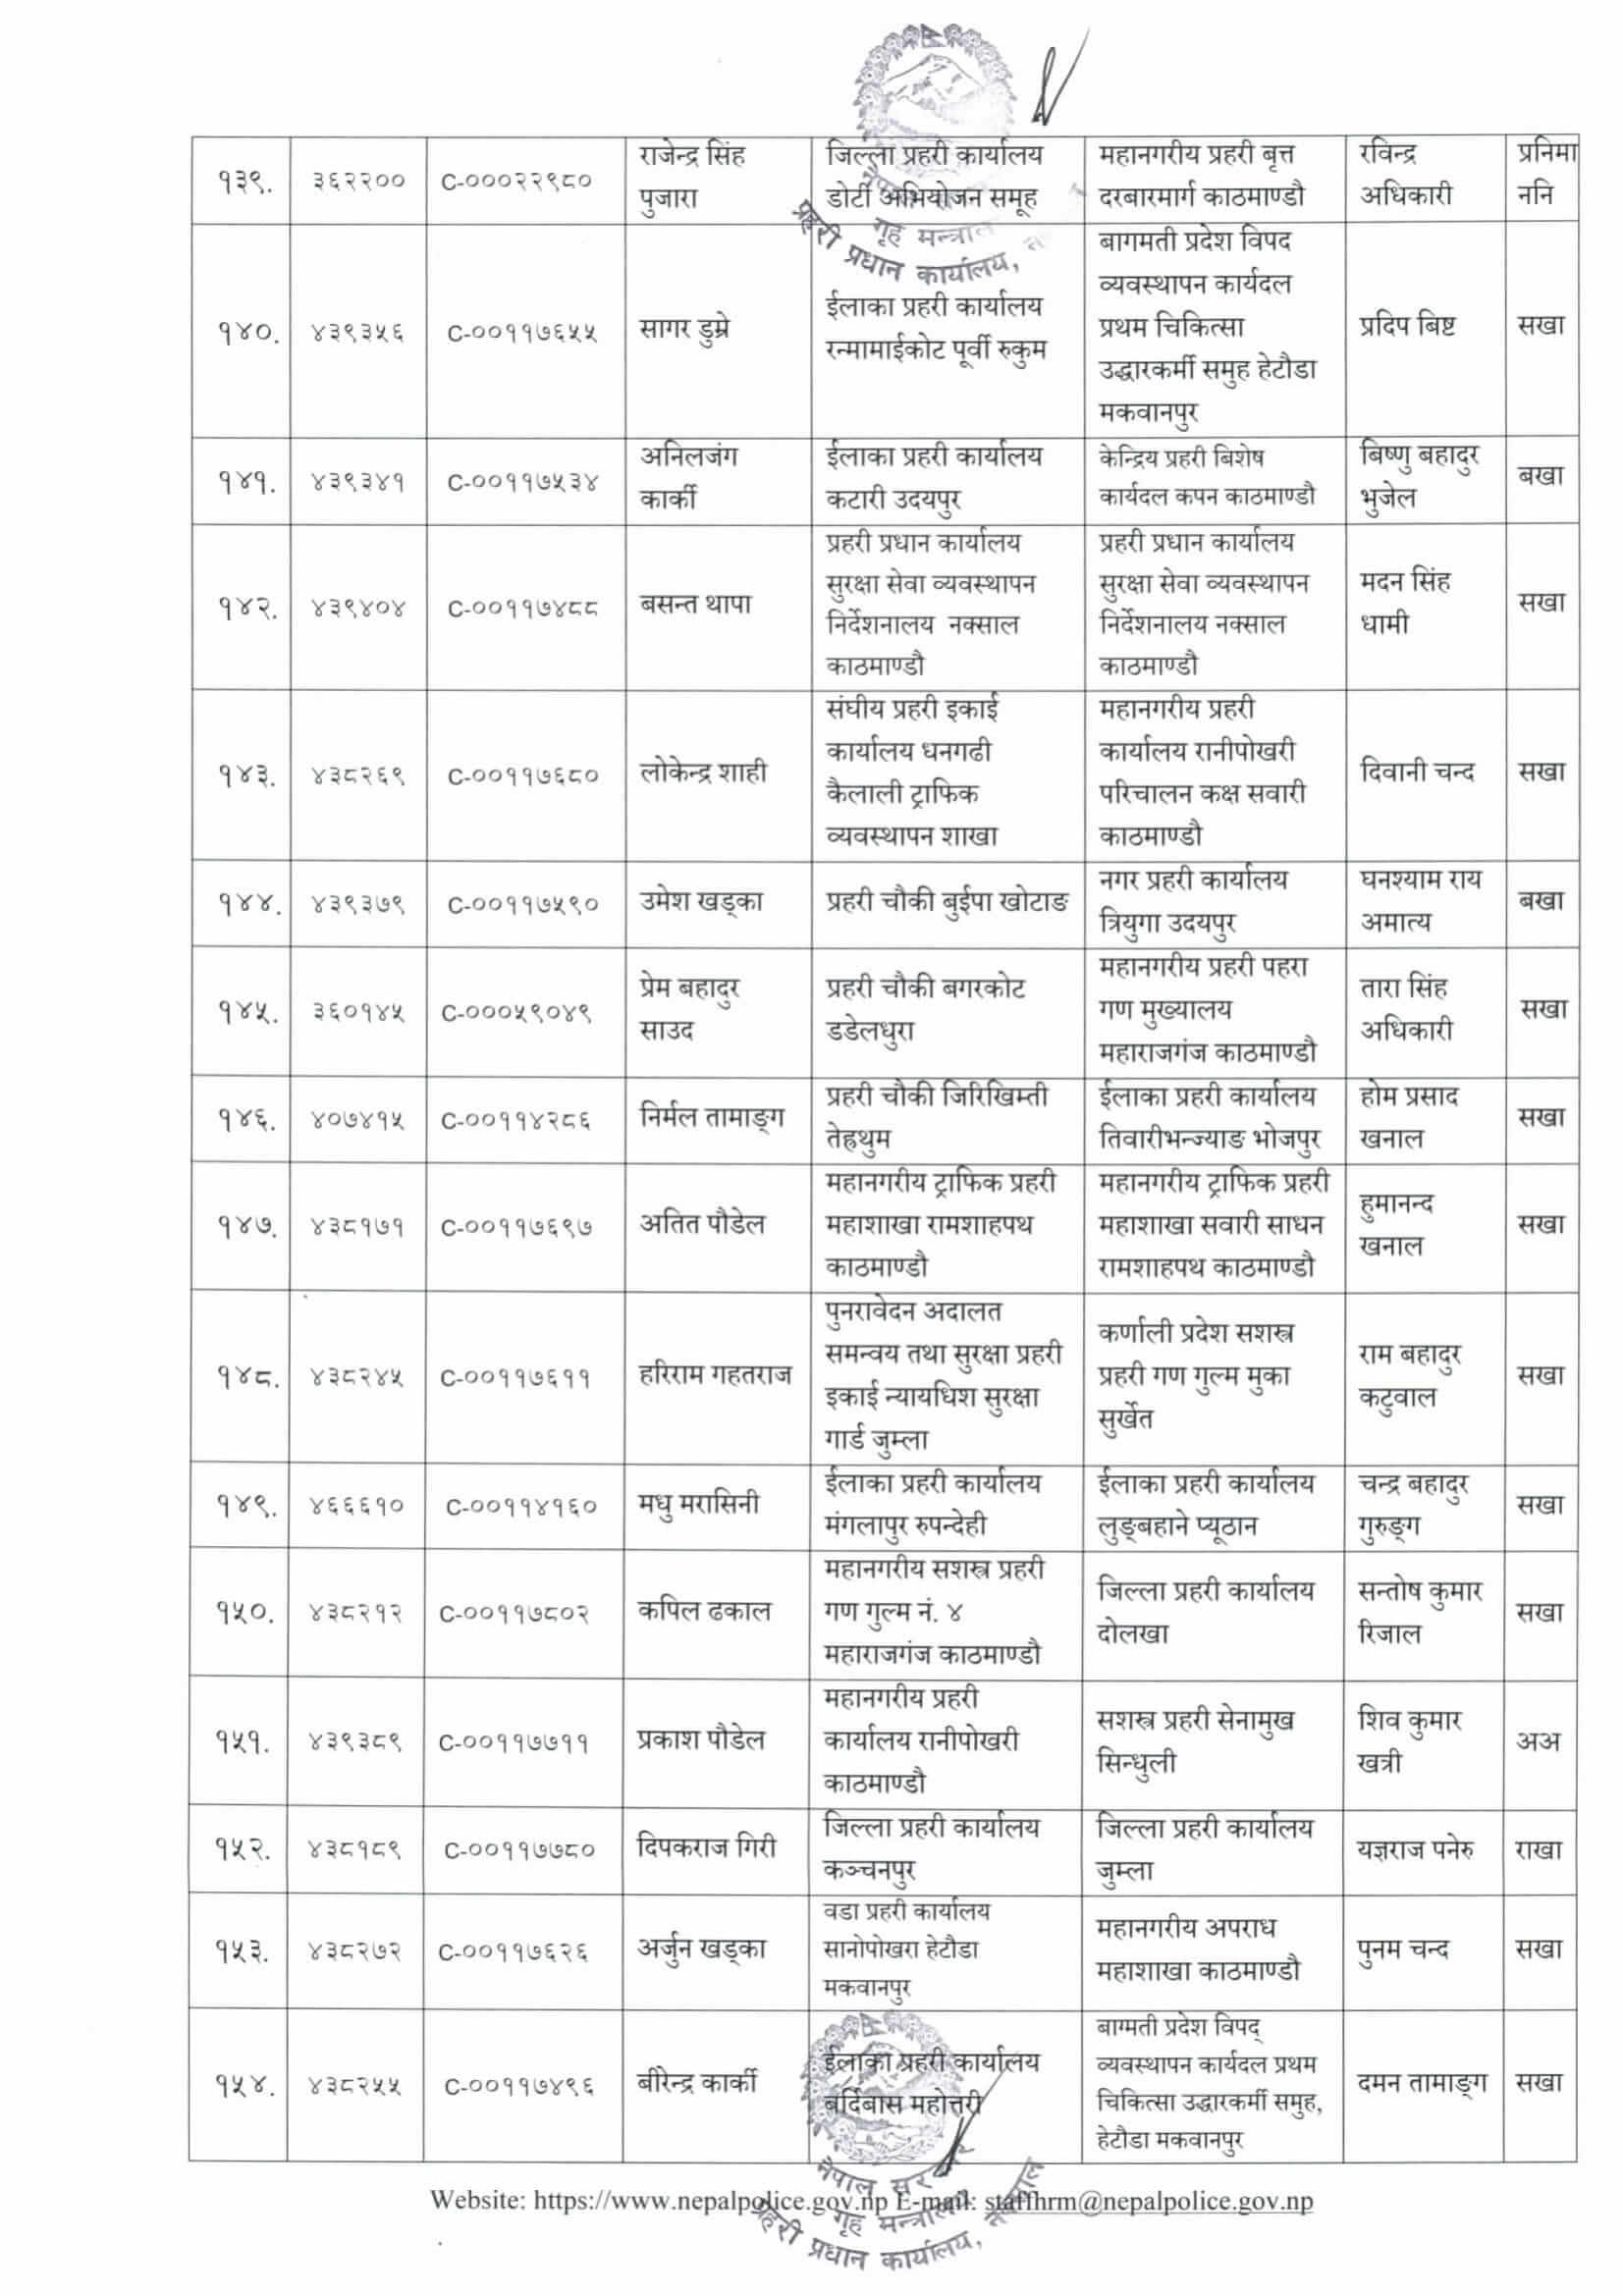 Nepal Police Sub Inspector (SI) Posting List